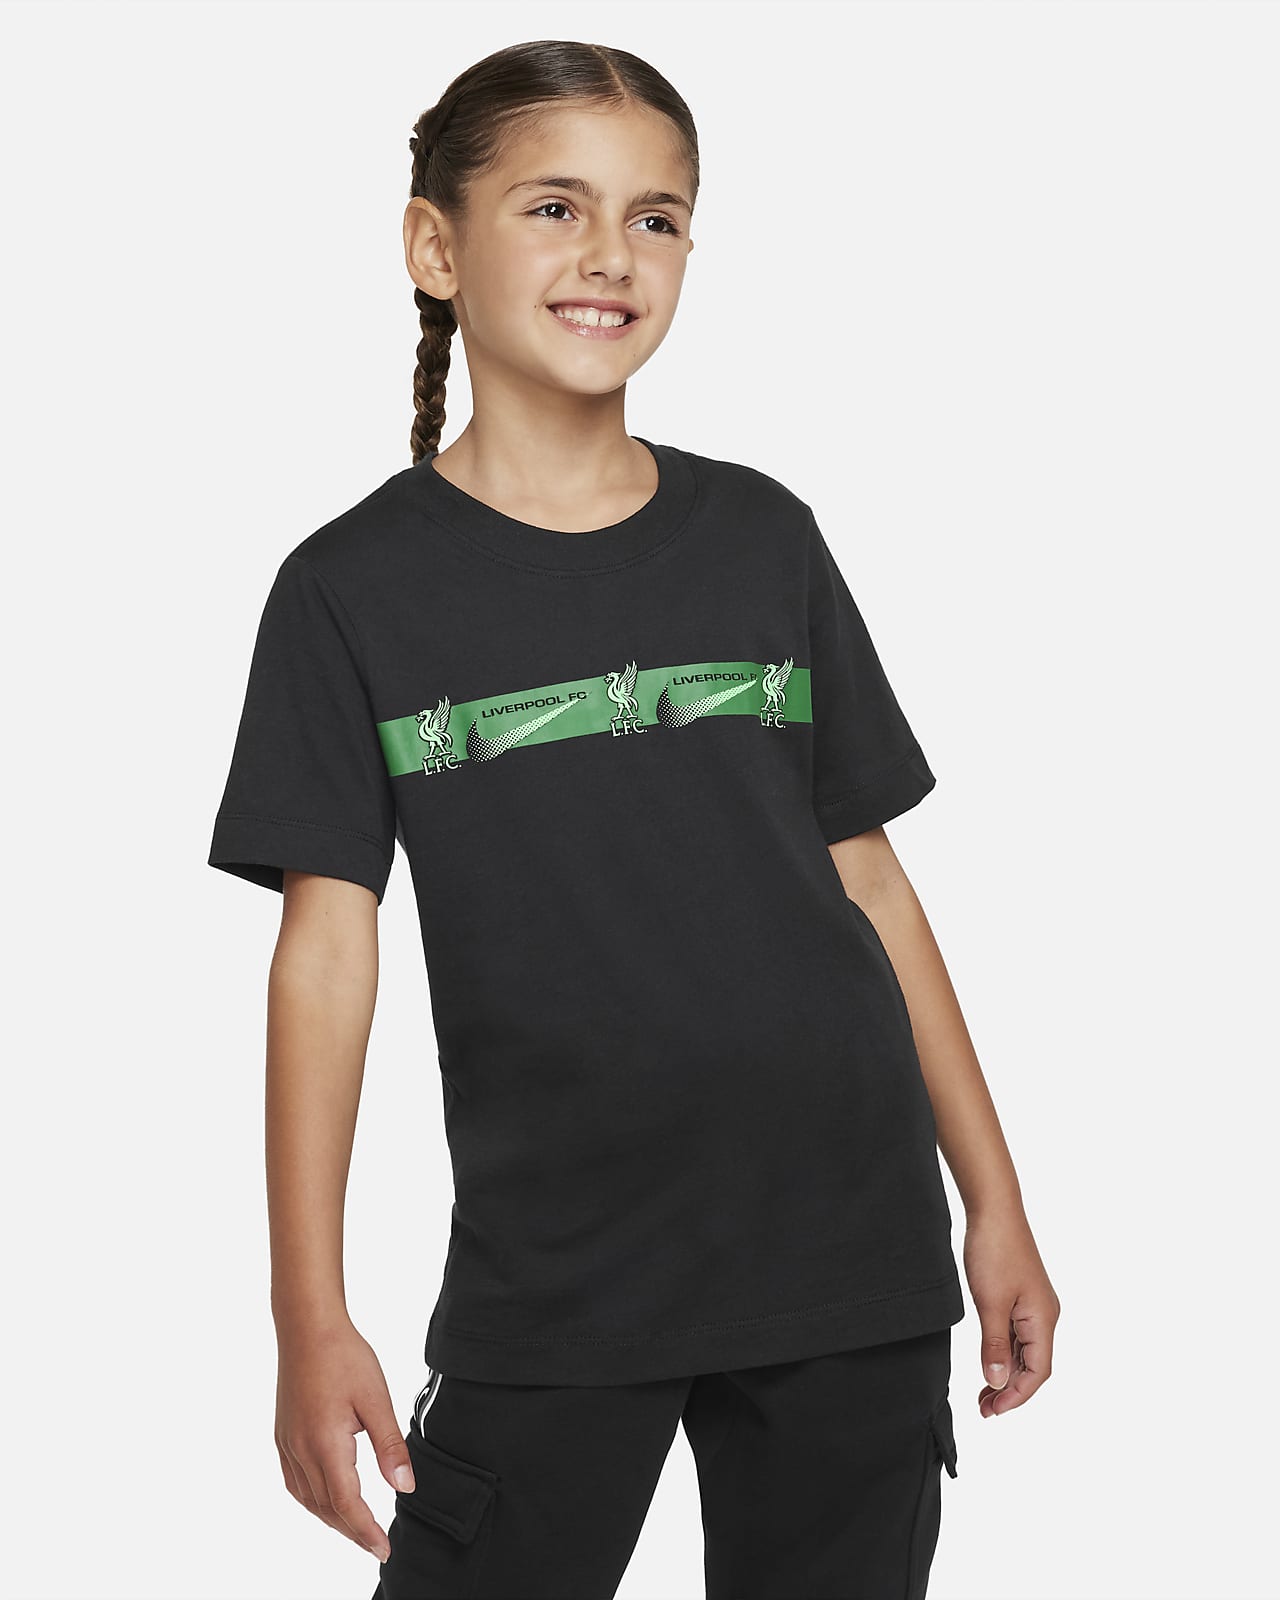 Liverpool FC Camiseta Nike Football - Niño/a